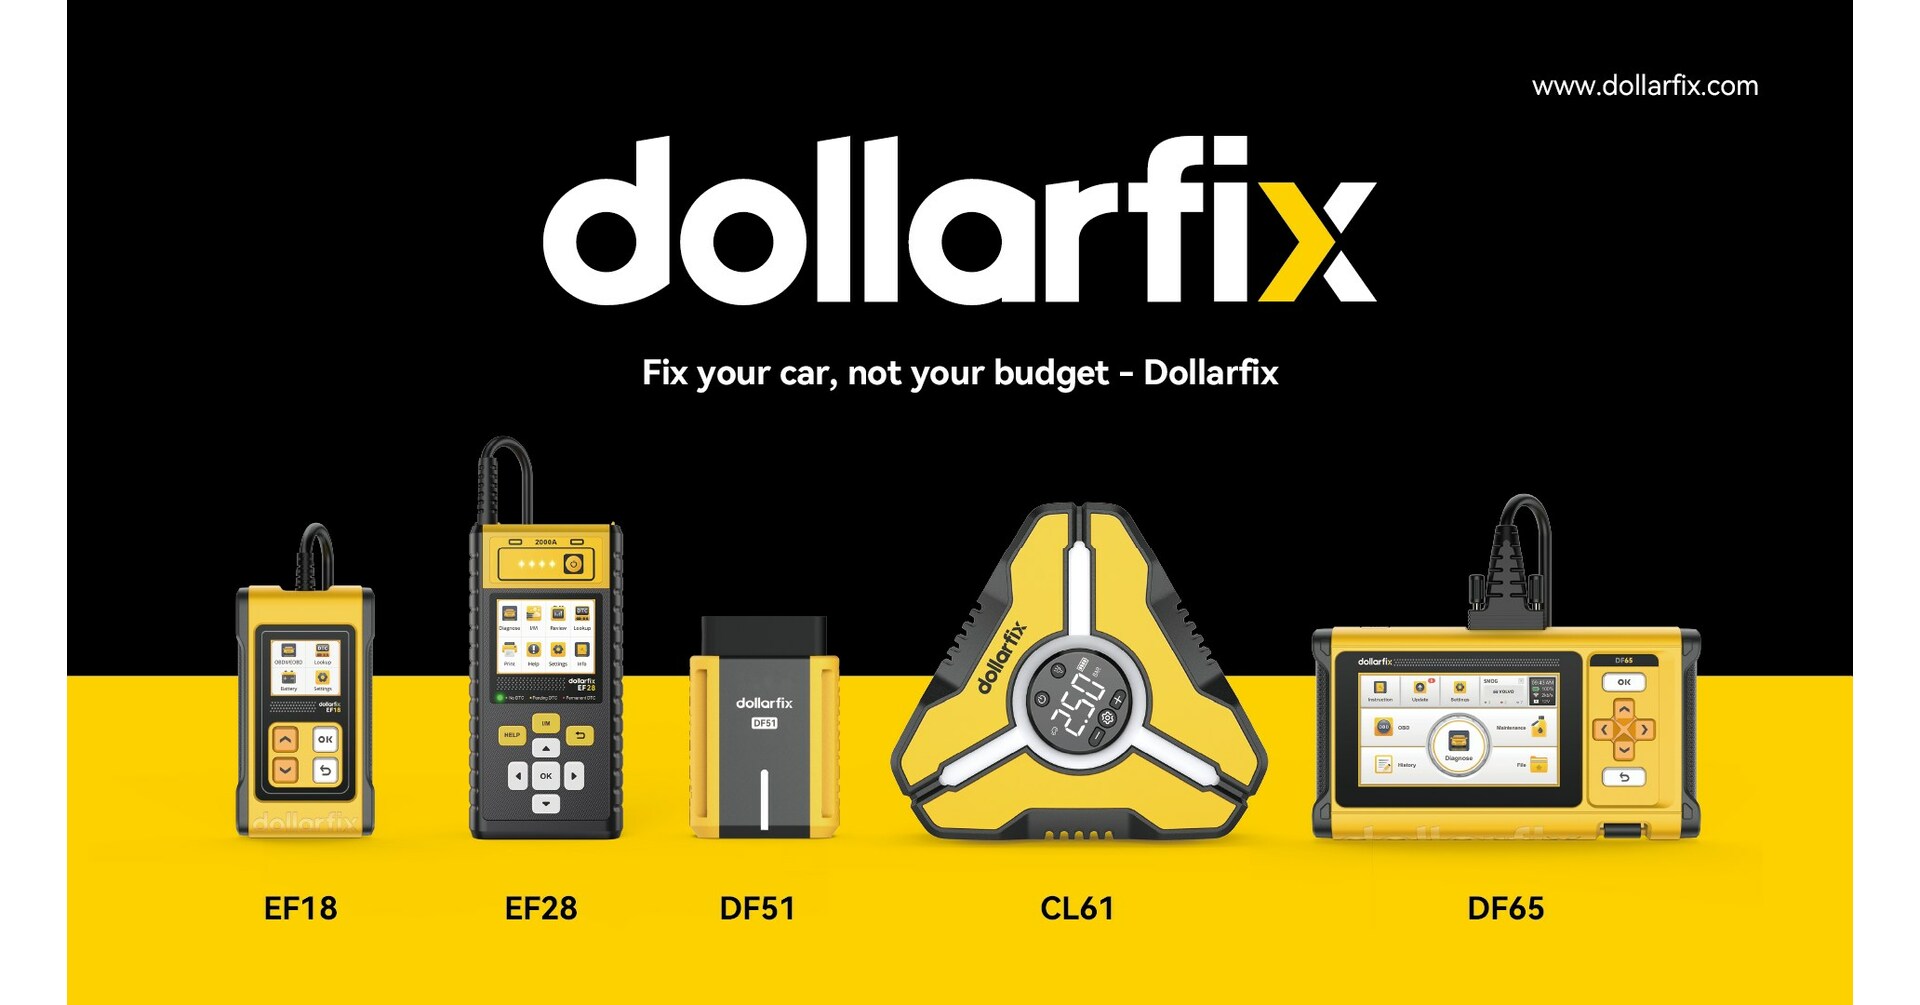 Dollarfix Tire Inflator Portable Air Compressor CL61: Earns Market